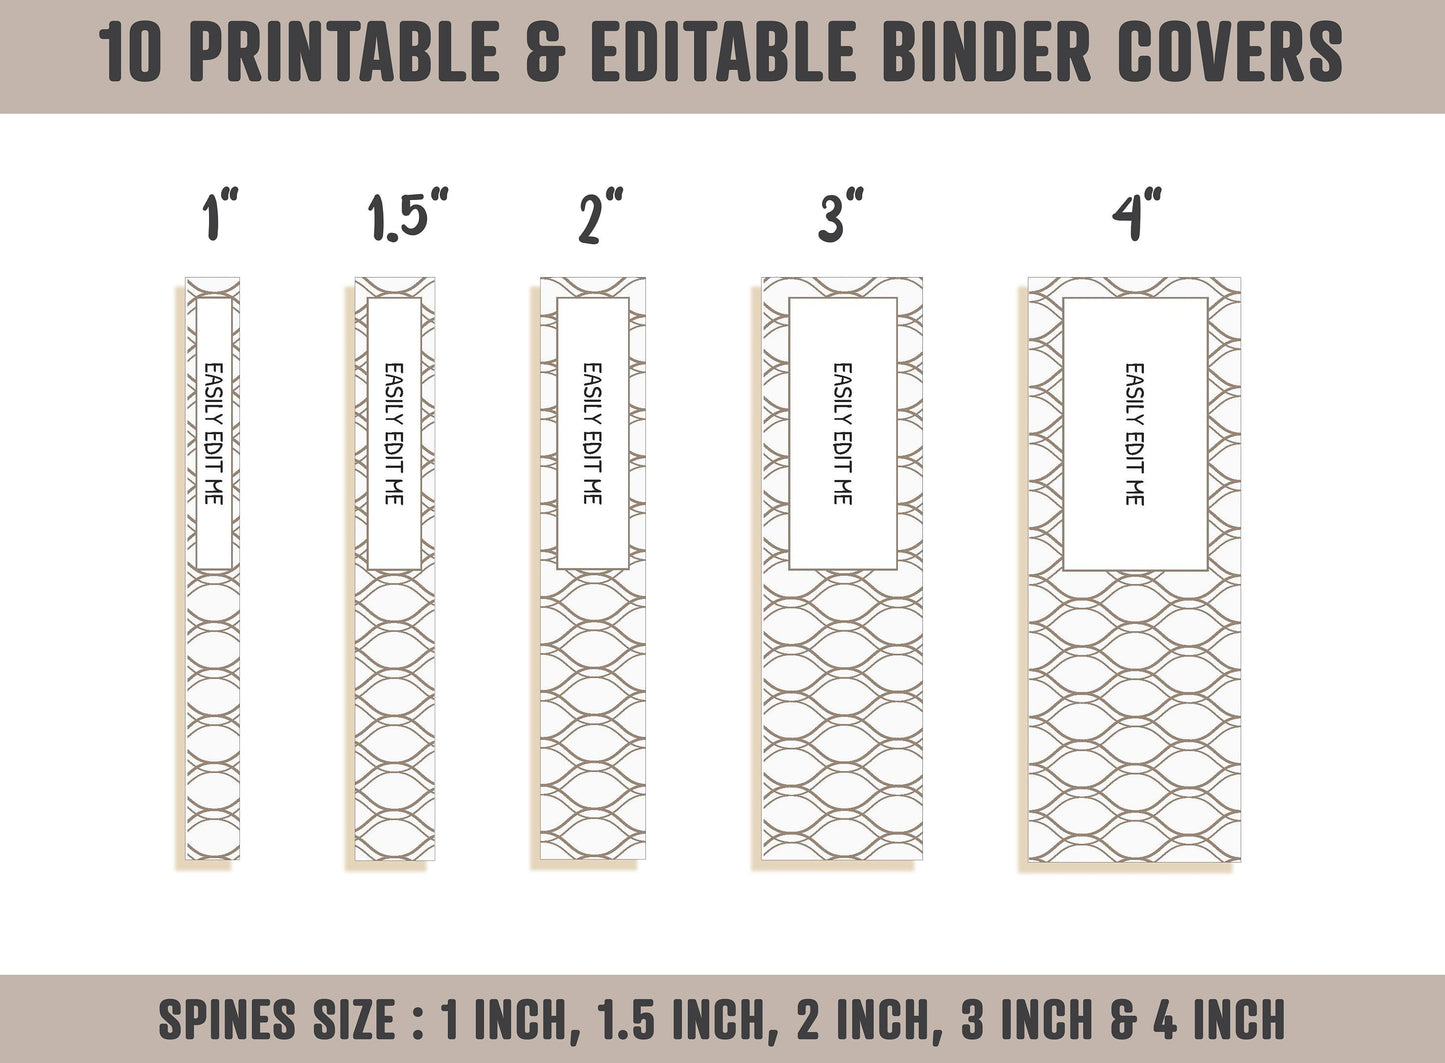 Binder Cover Page, 10 Printable & Editable Binder Covers+Spines, Binder Insert/Template Planner Cover Teacher/School, Printable Binder Cover